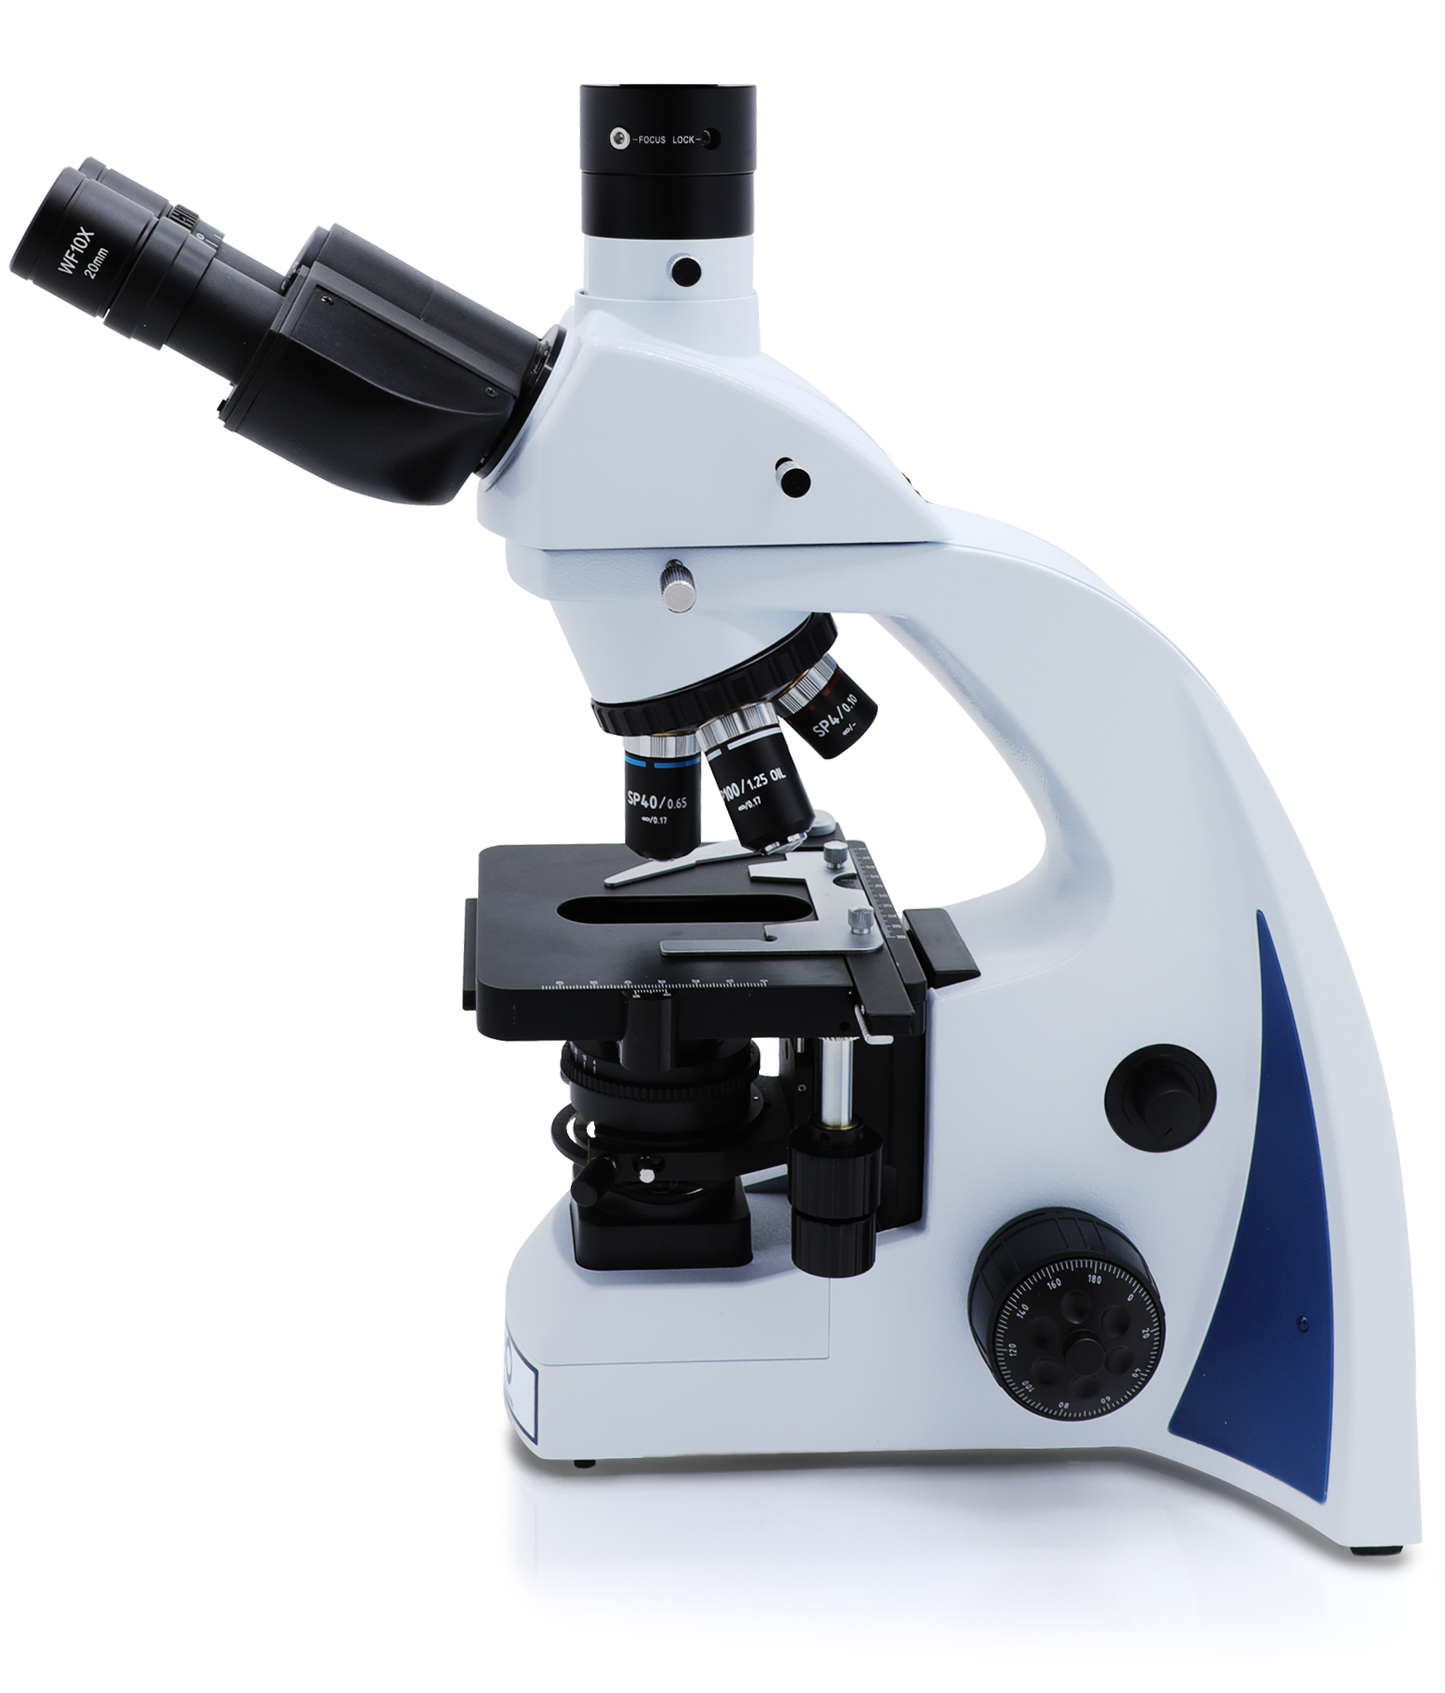 i4 Infinity Semi-Plan Trinocular Microscope